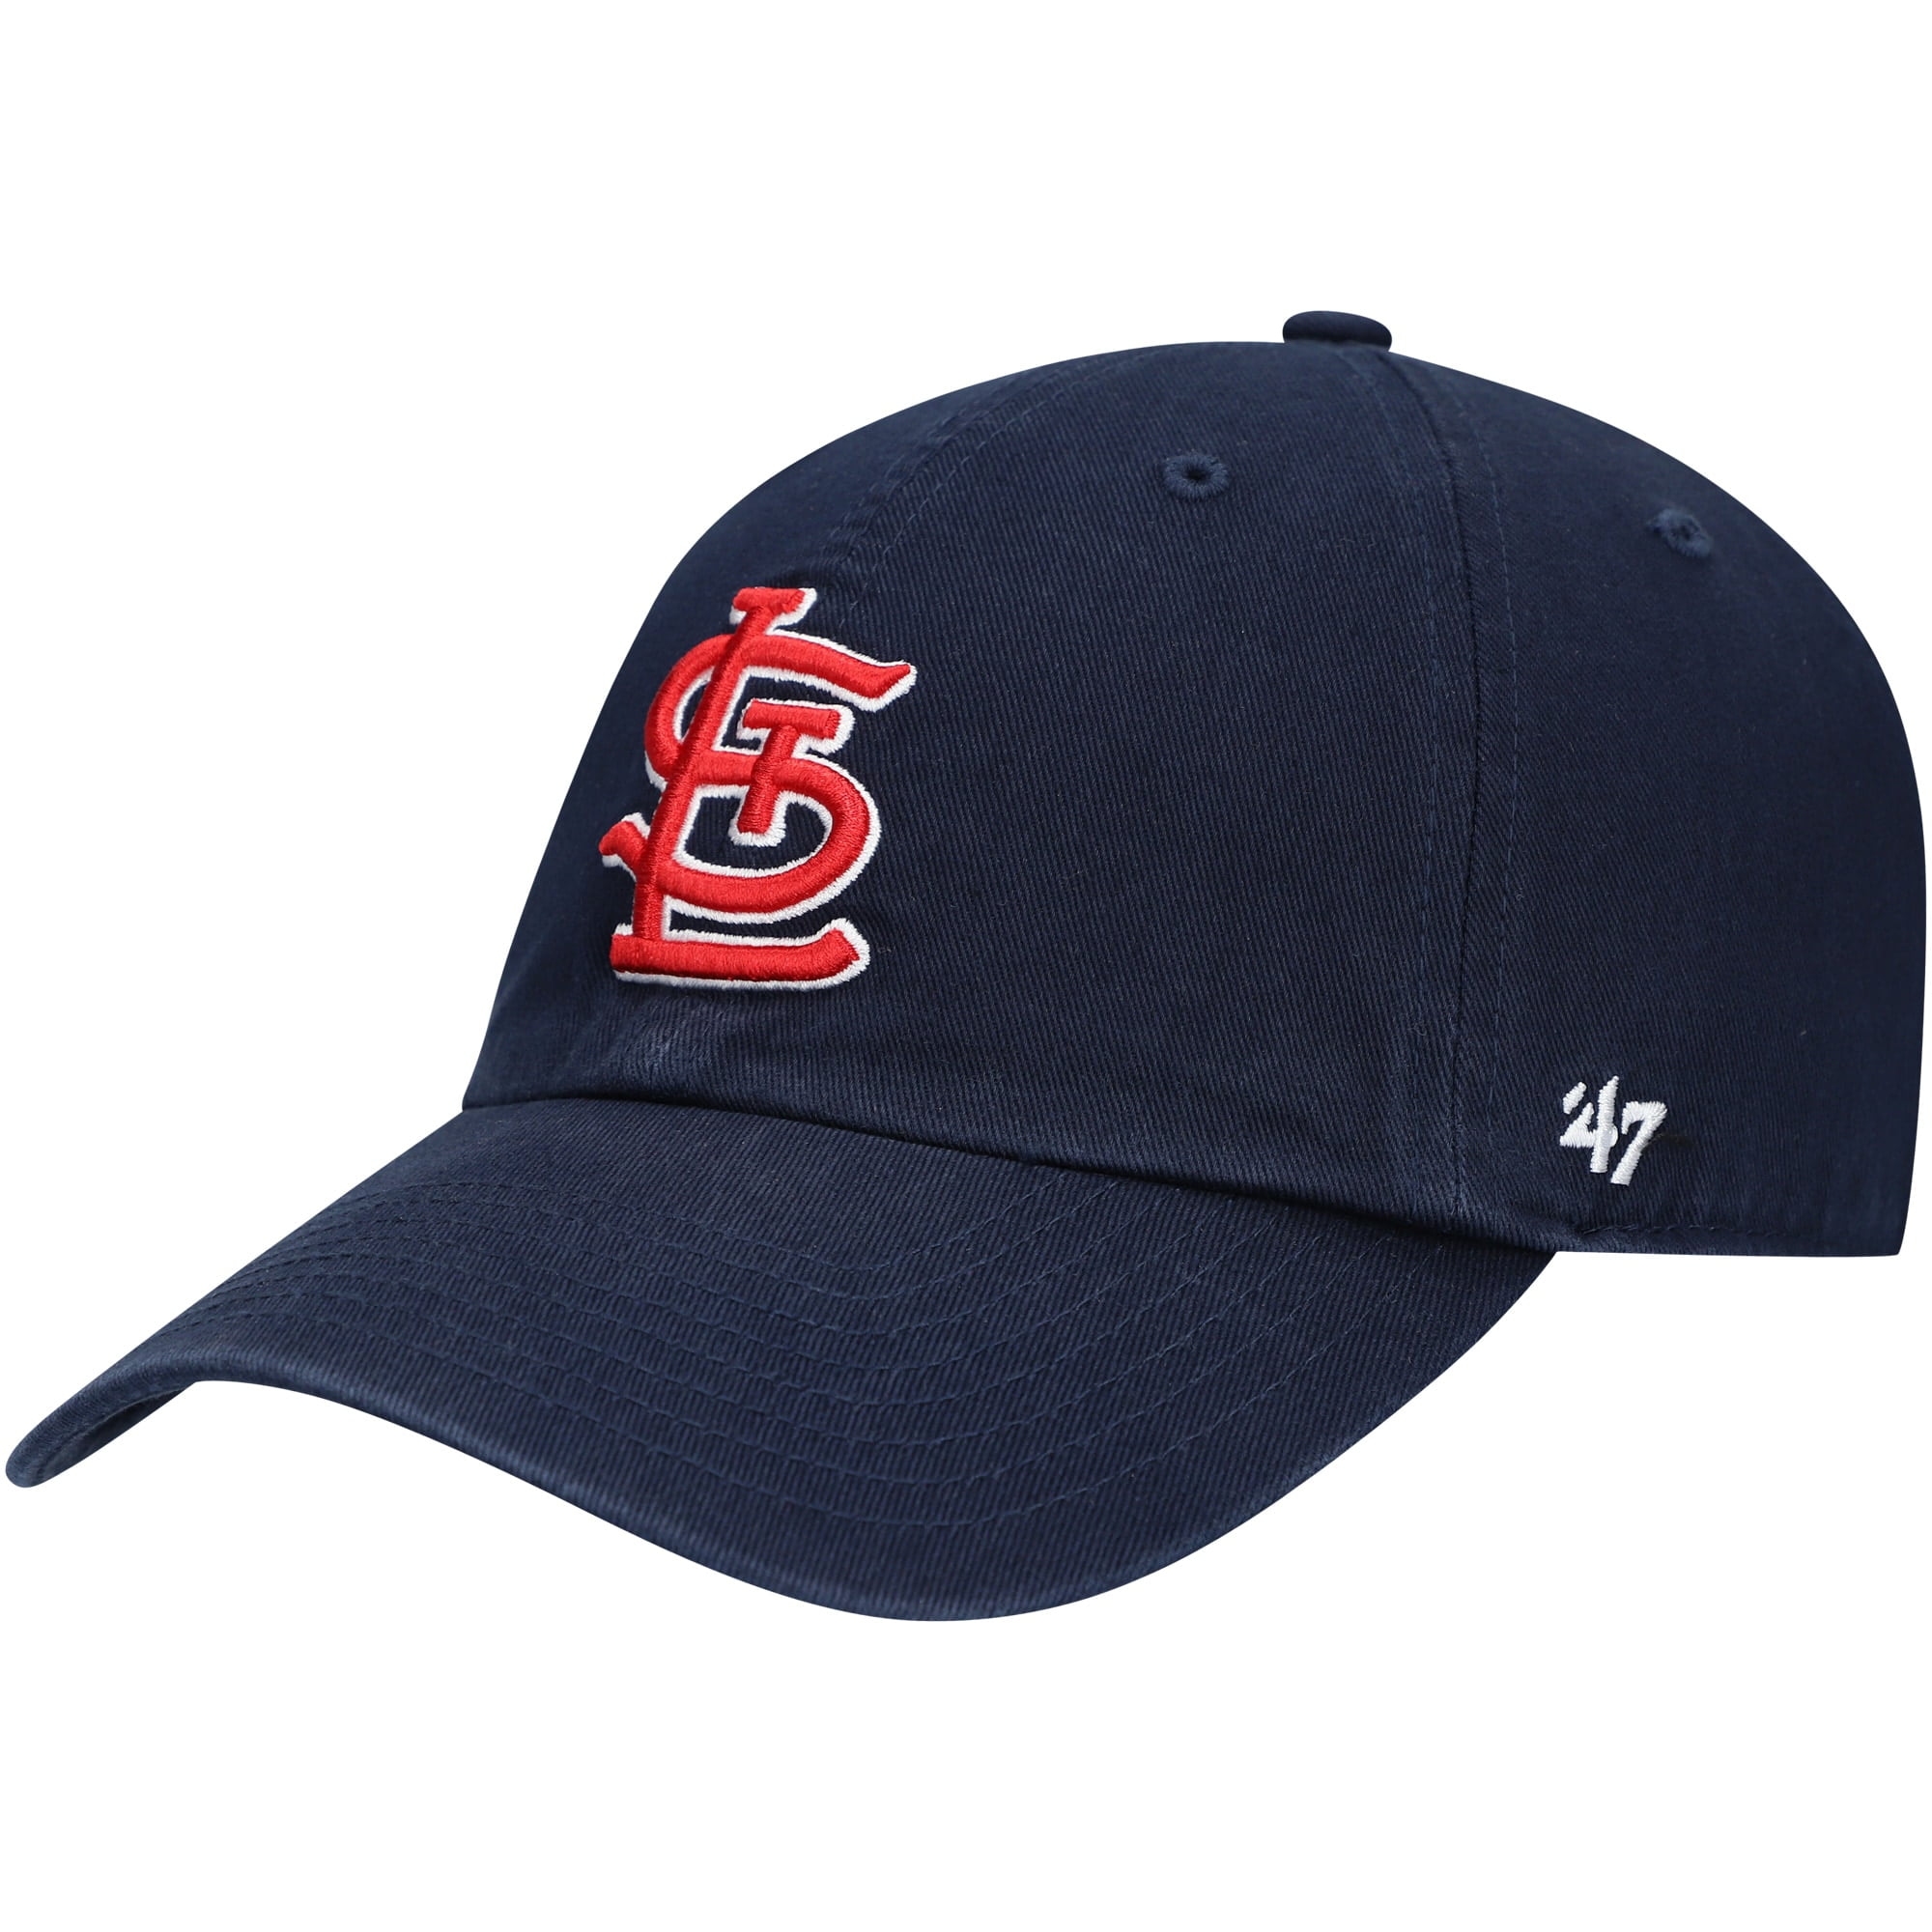 Men's '47 Navy St. Louis Cardinals Clean Up Adjustable Hat - OSFA 